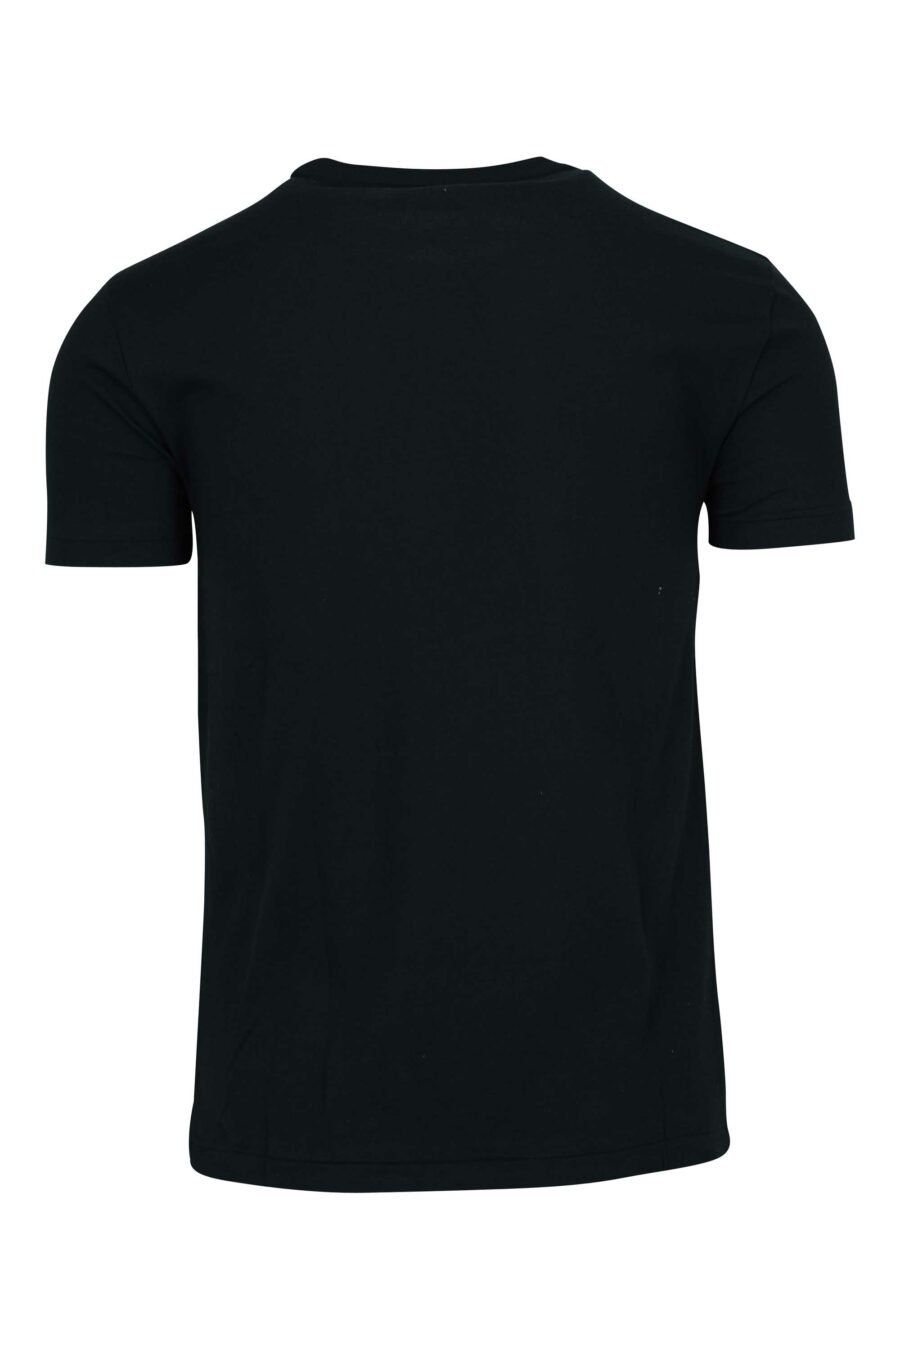 Camiseta negra con minilogo "polo" - 5045018254620 1